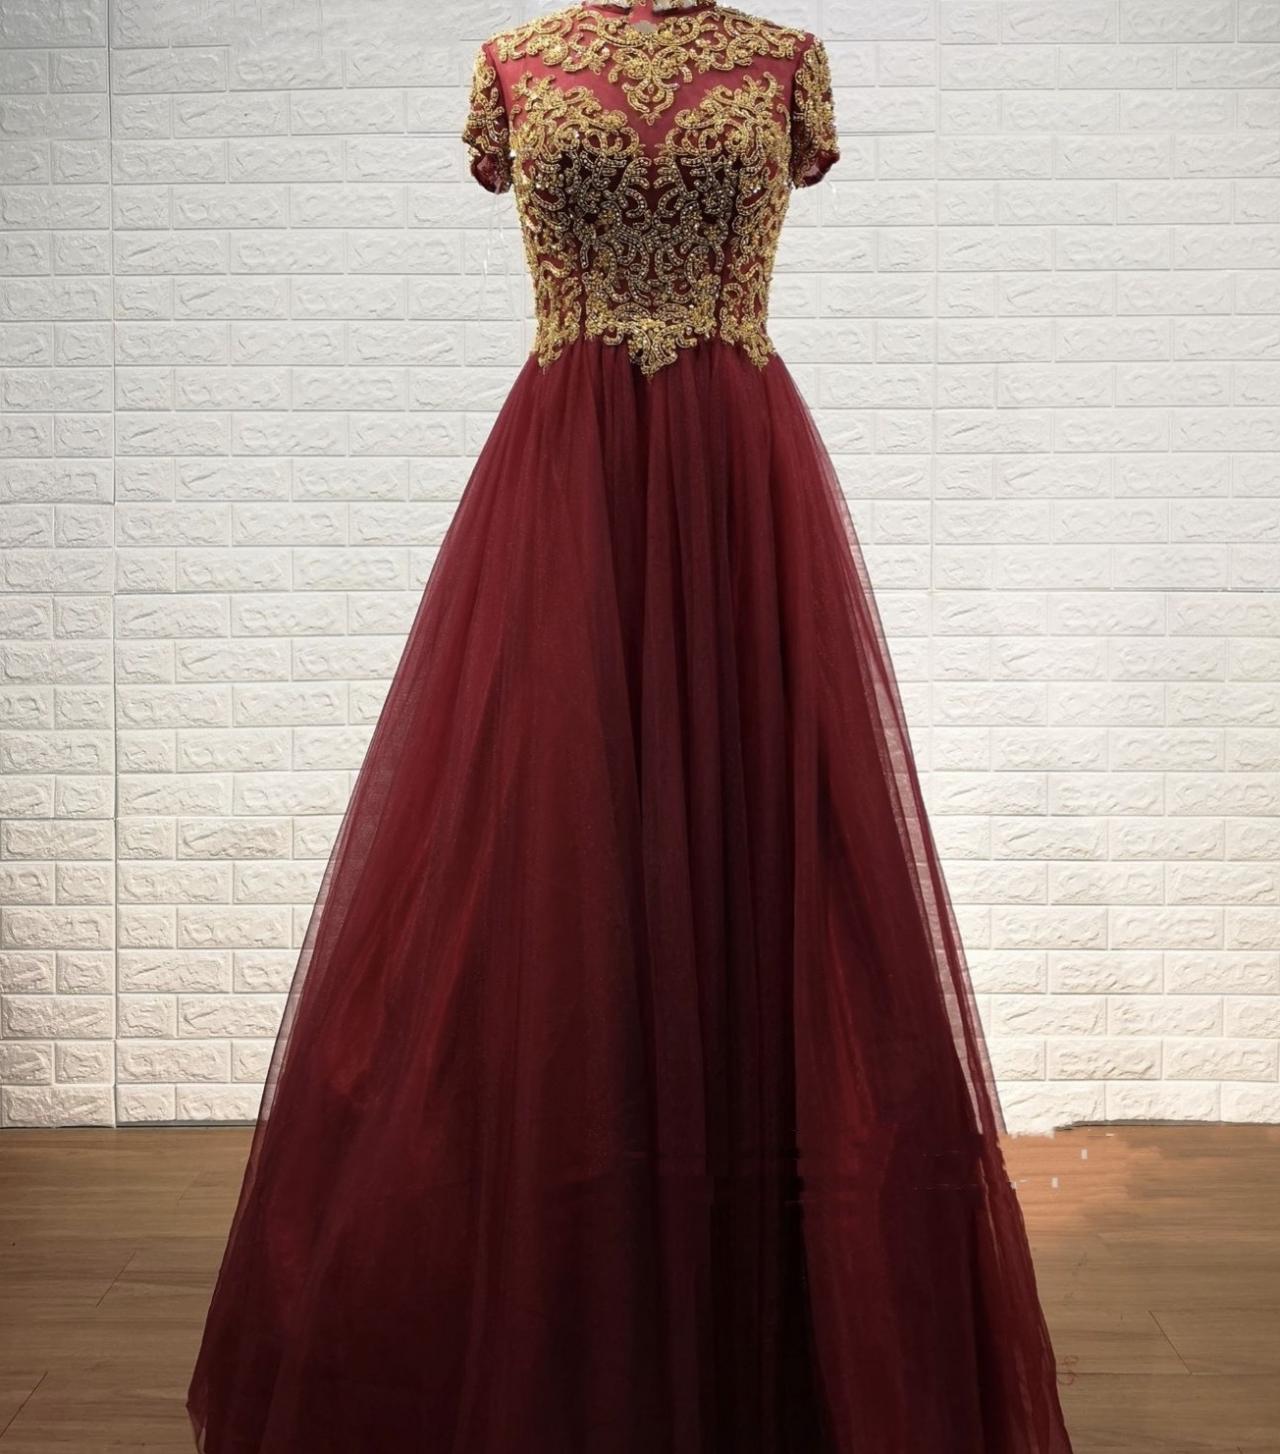 Red Hand Beaded High Quality Prom Dress, High Neck Evening Dress, Backless Prom Dress,custom Made